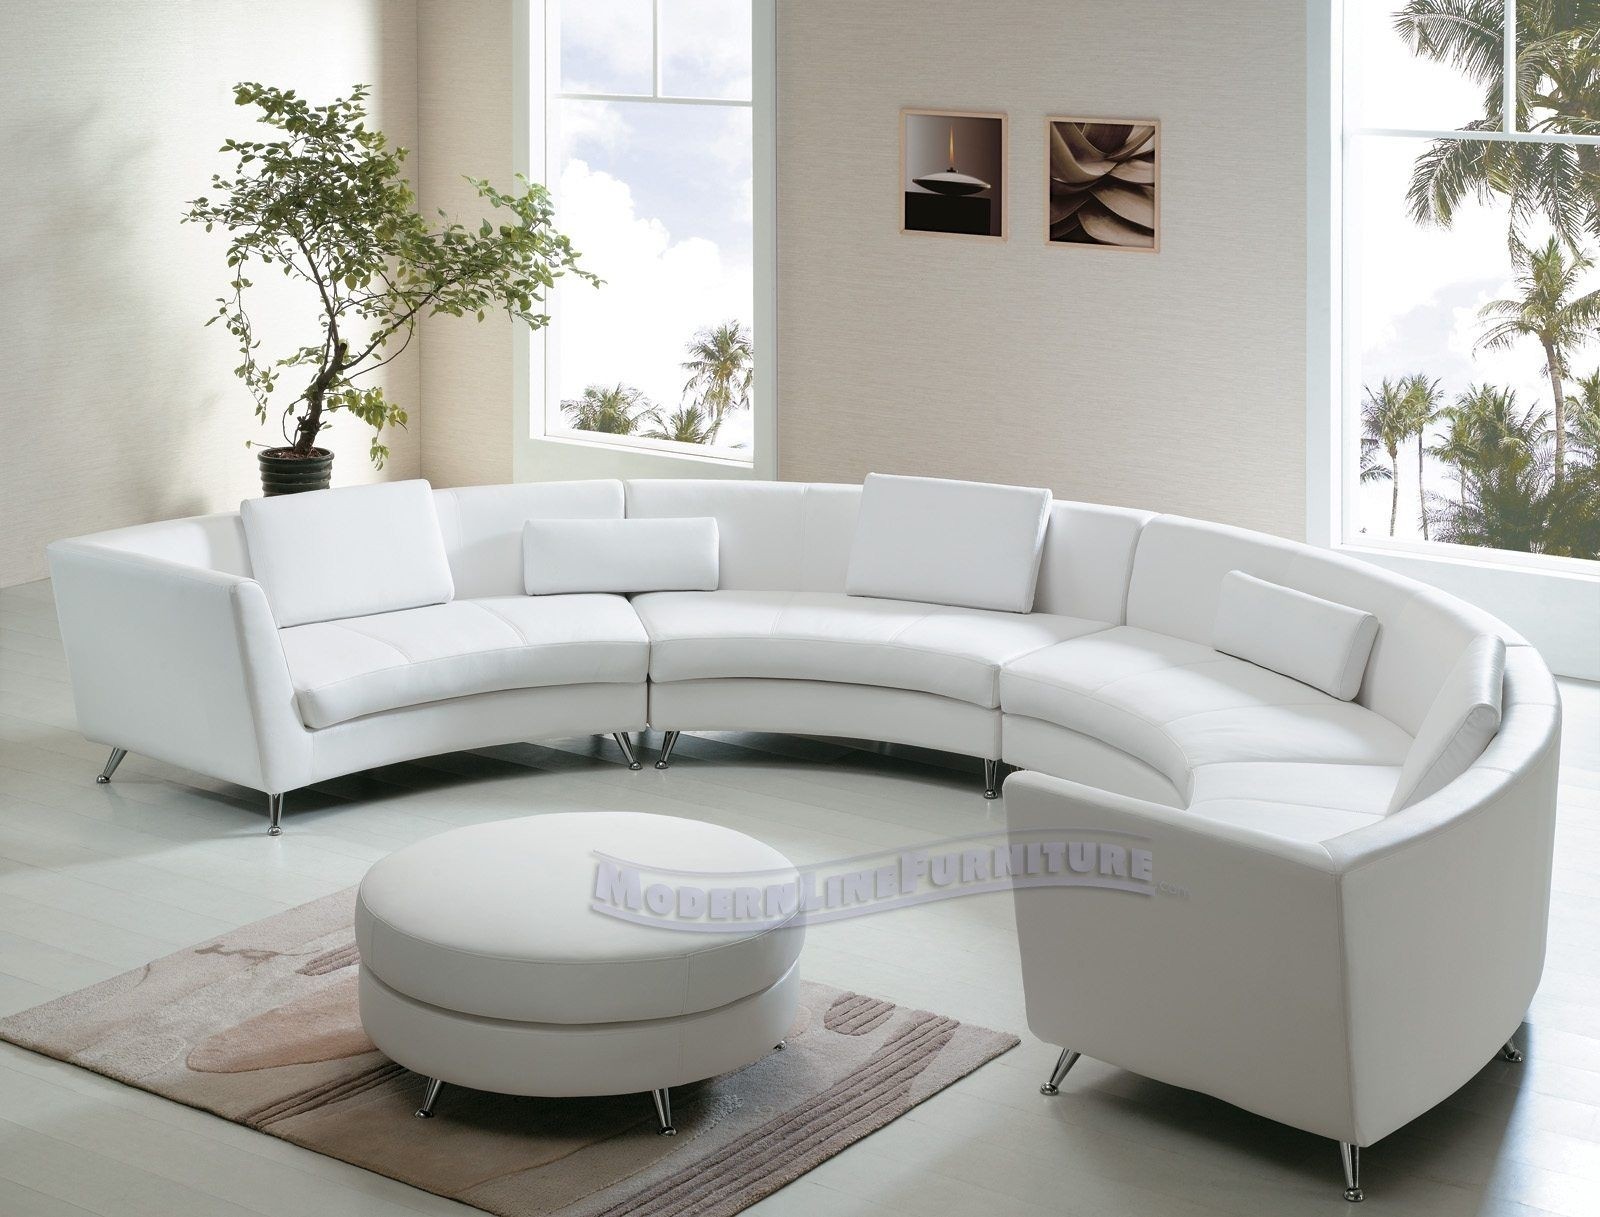 Curved fabric sofa